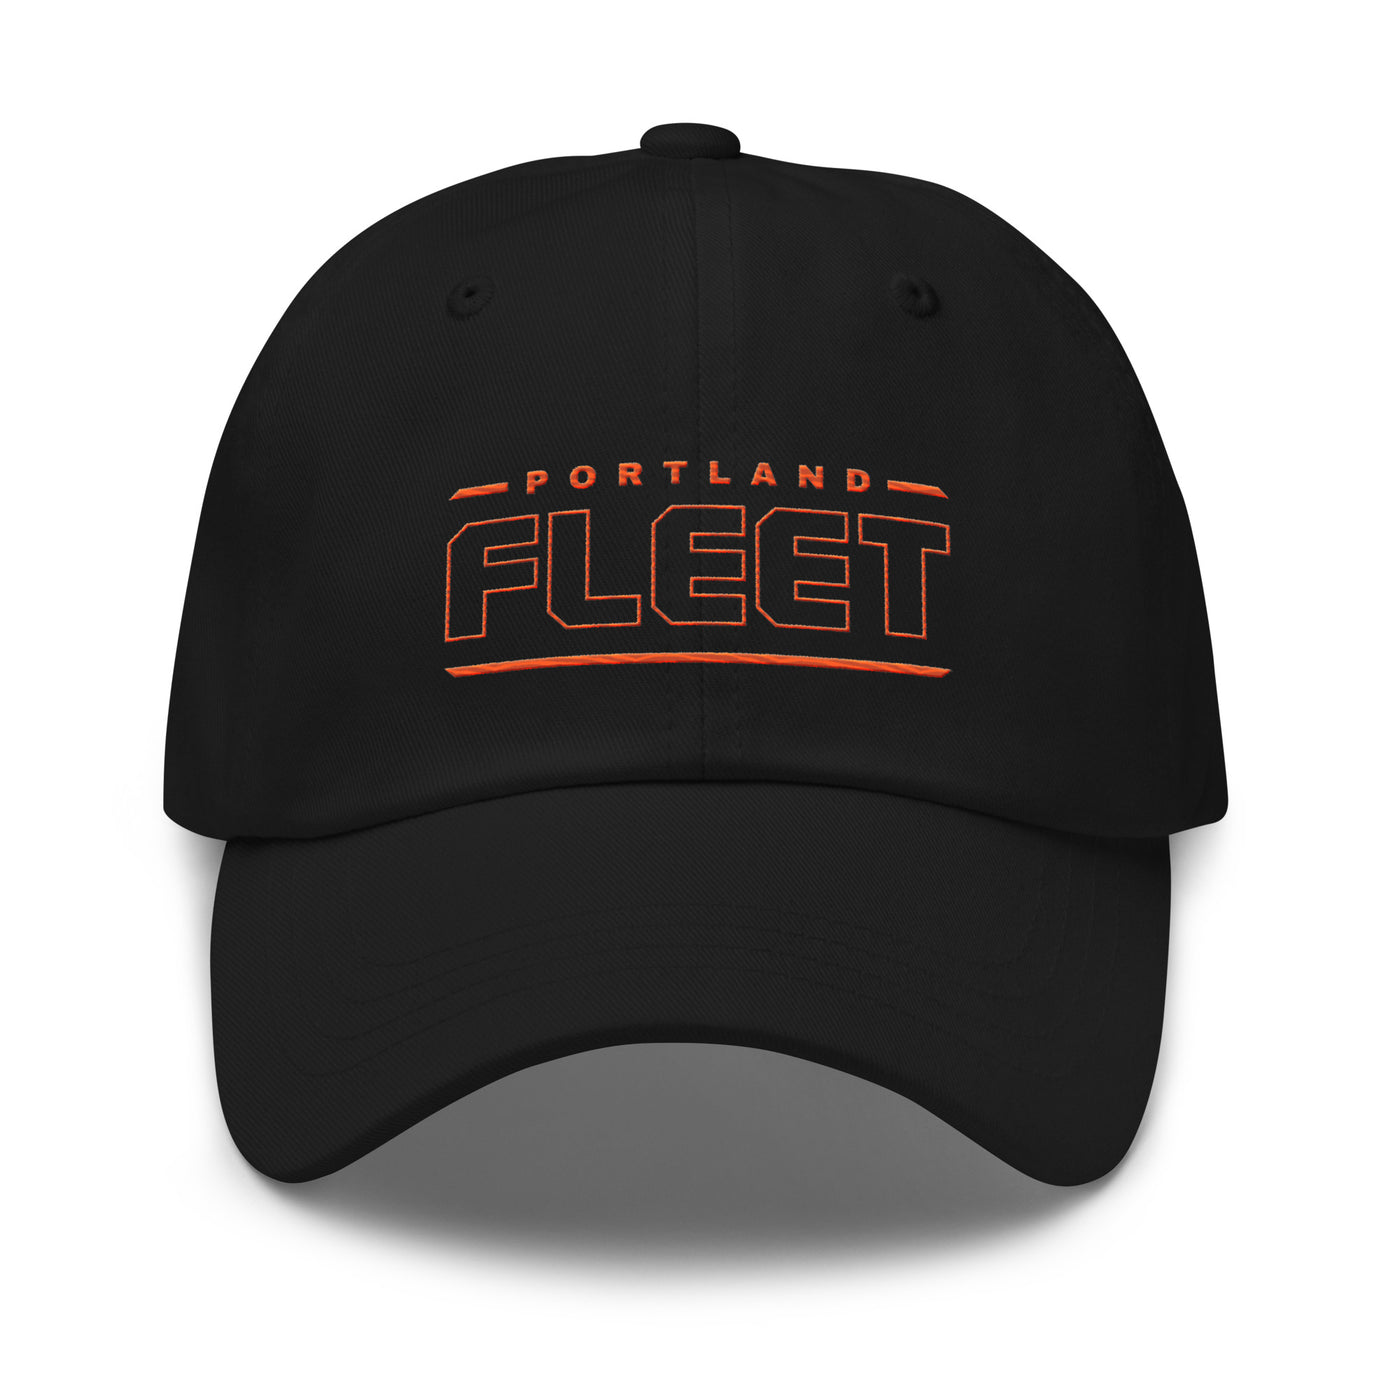 Portland Fleet Dad hat